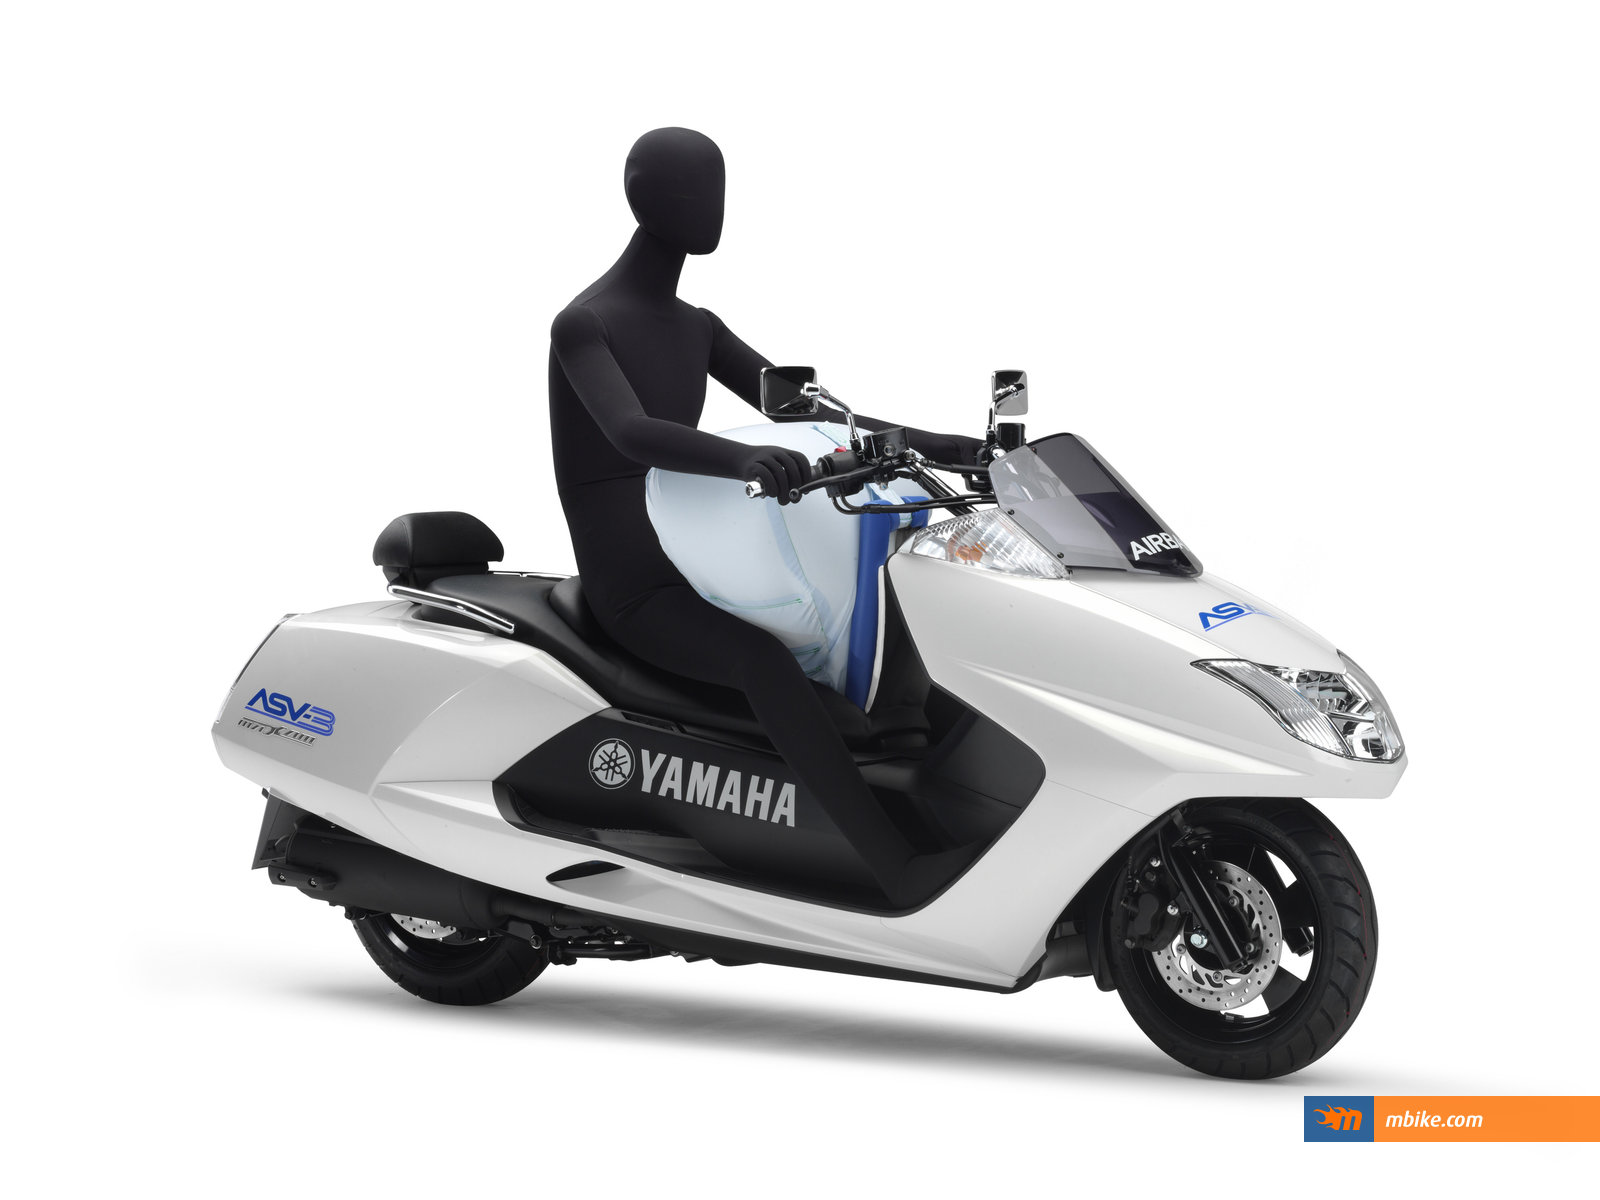 2006 Yamaha CP 250 (Morphous)